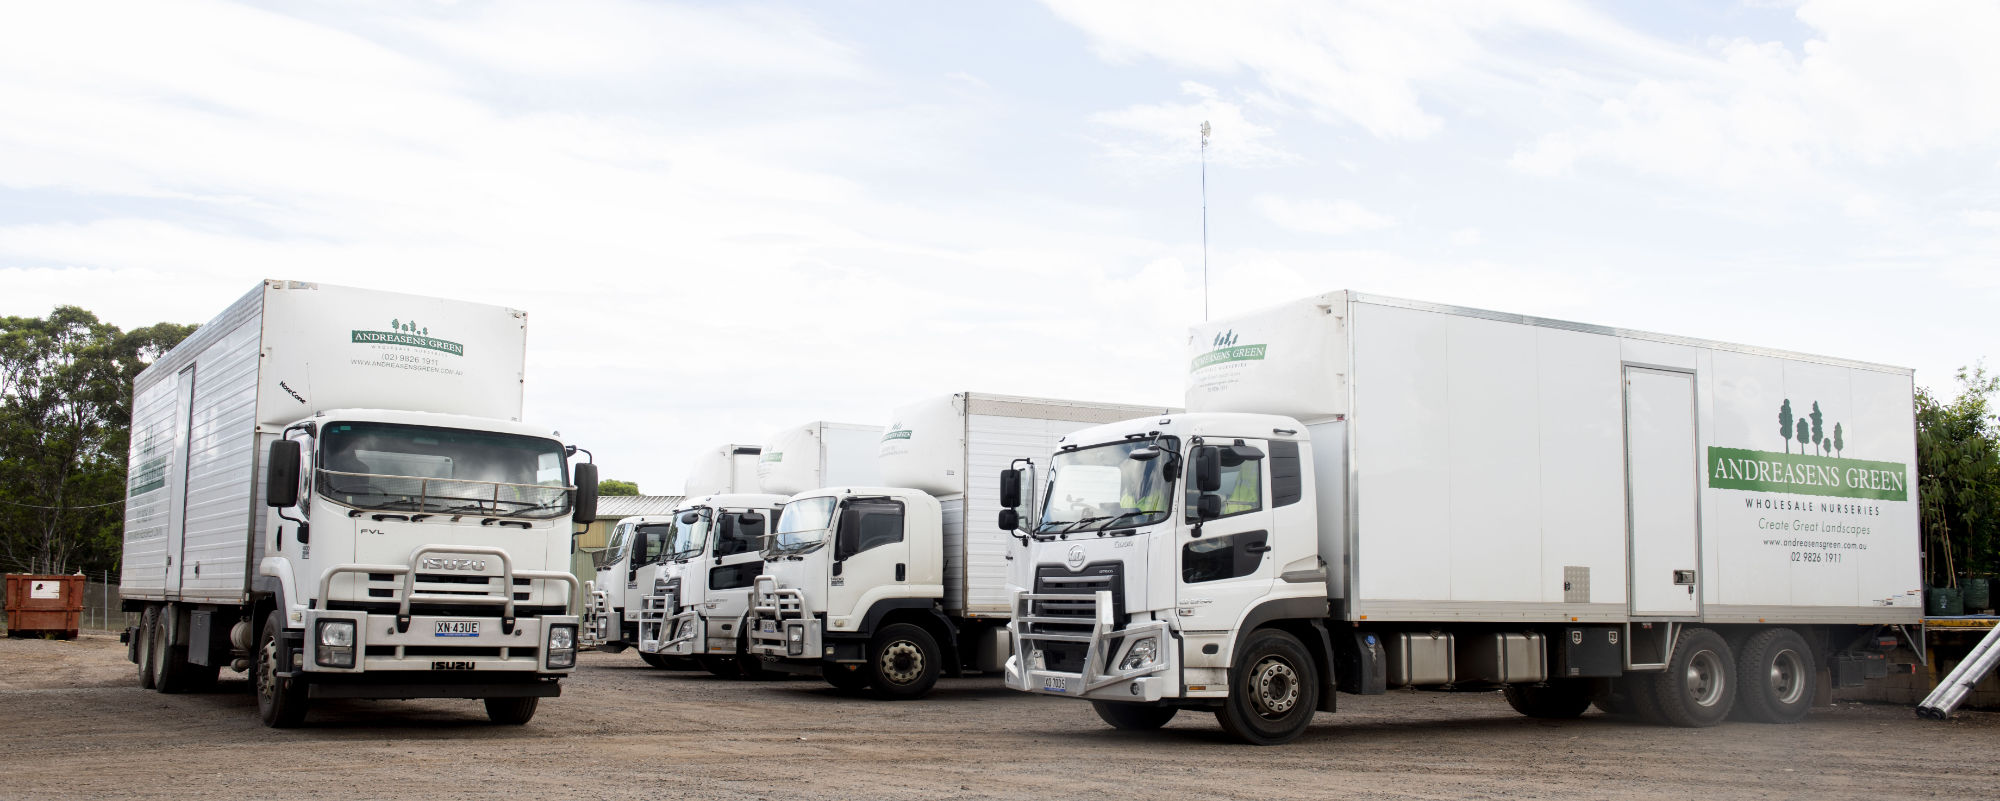 Andreasens Green fleet of trucks